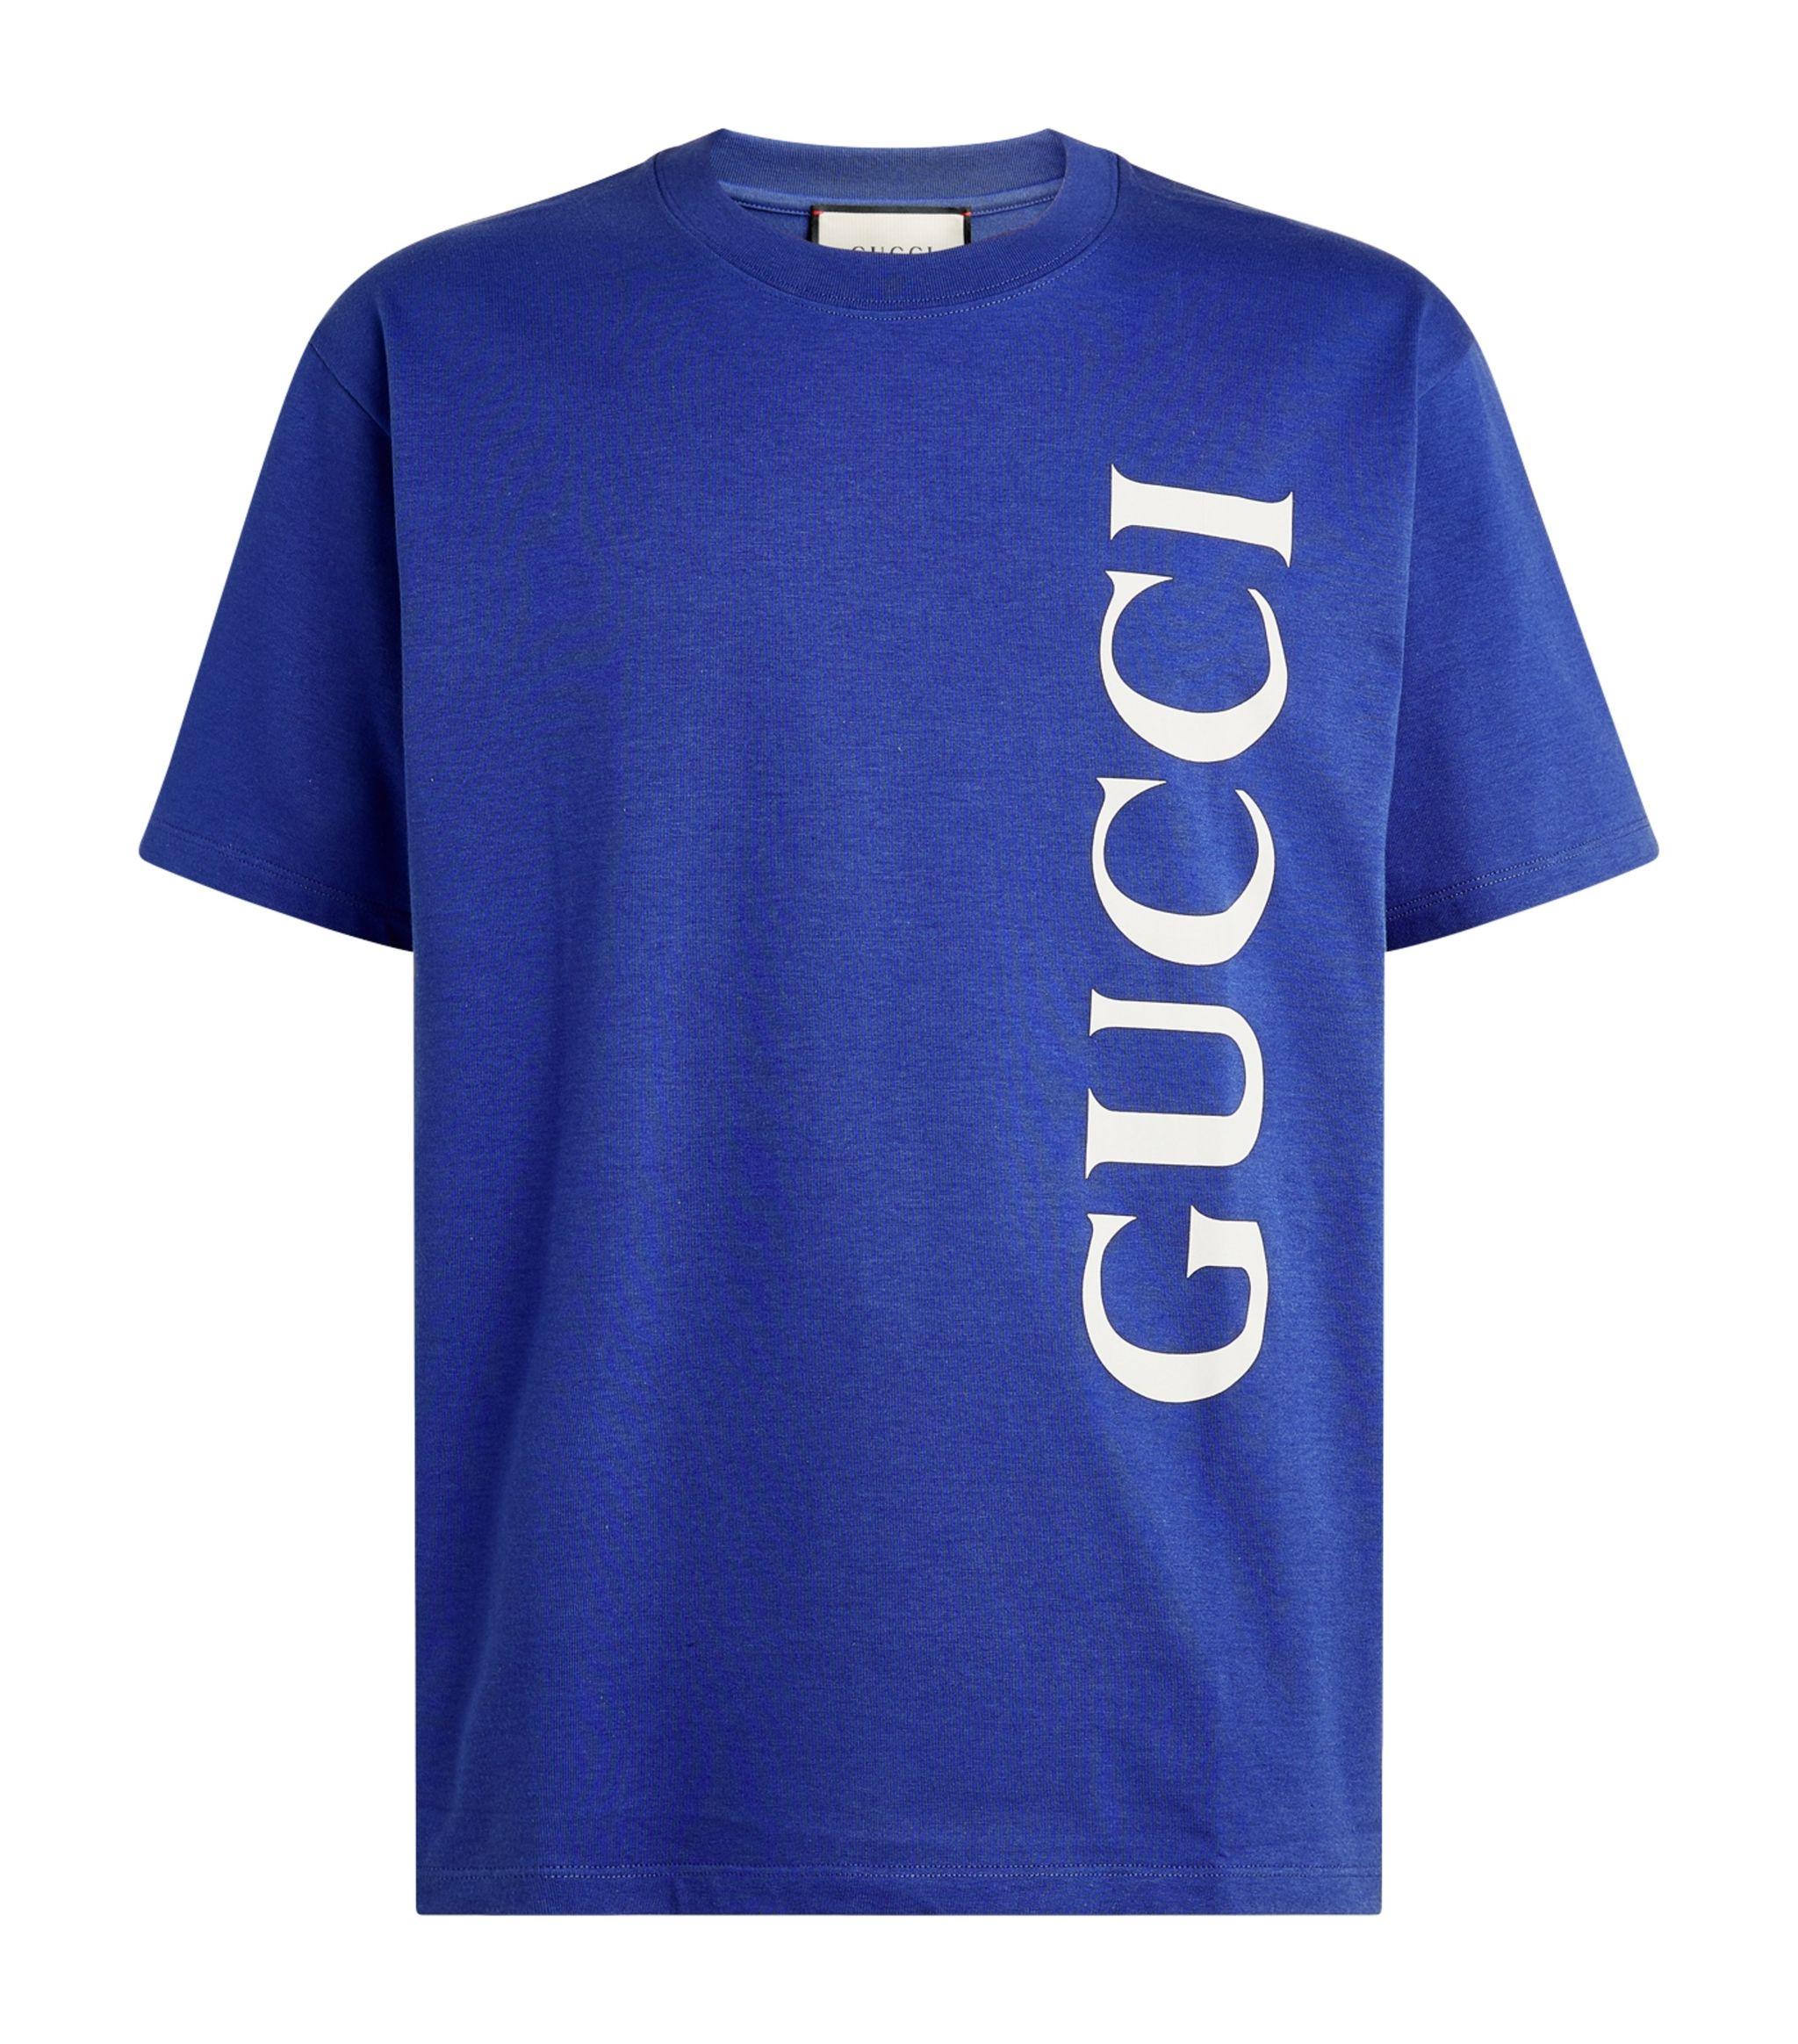 Gucci Cotton Vertical Logo T-shirt in Blue for Men - Lyst